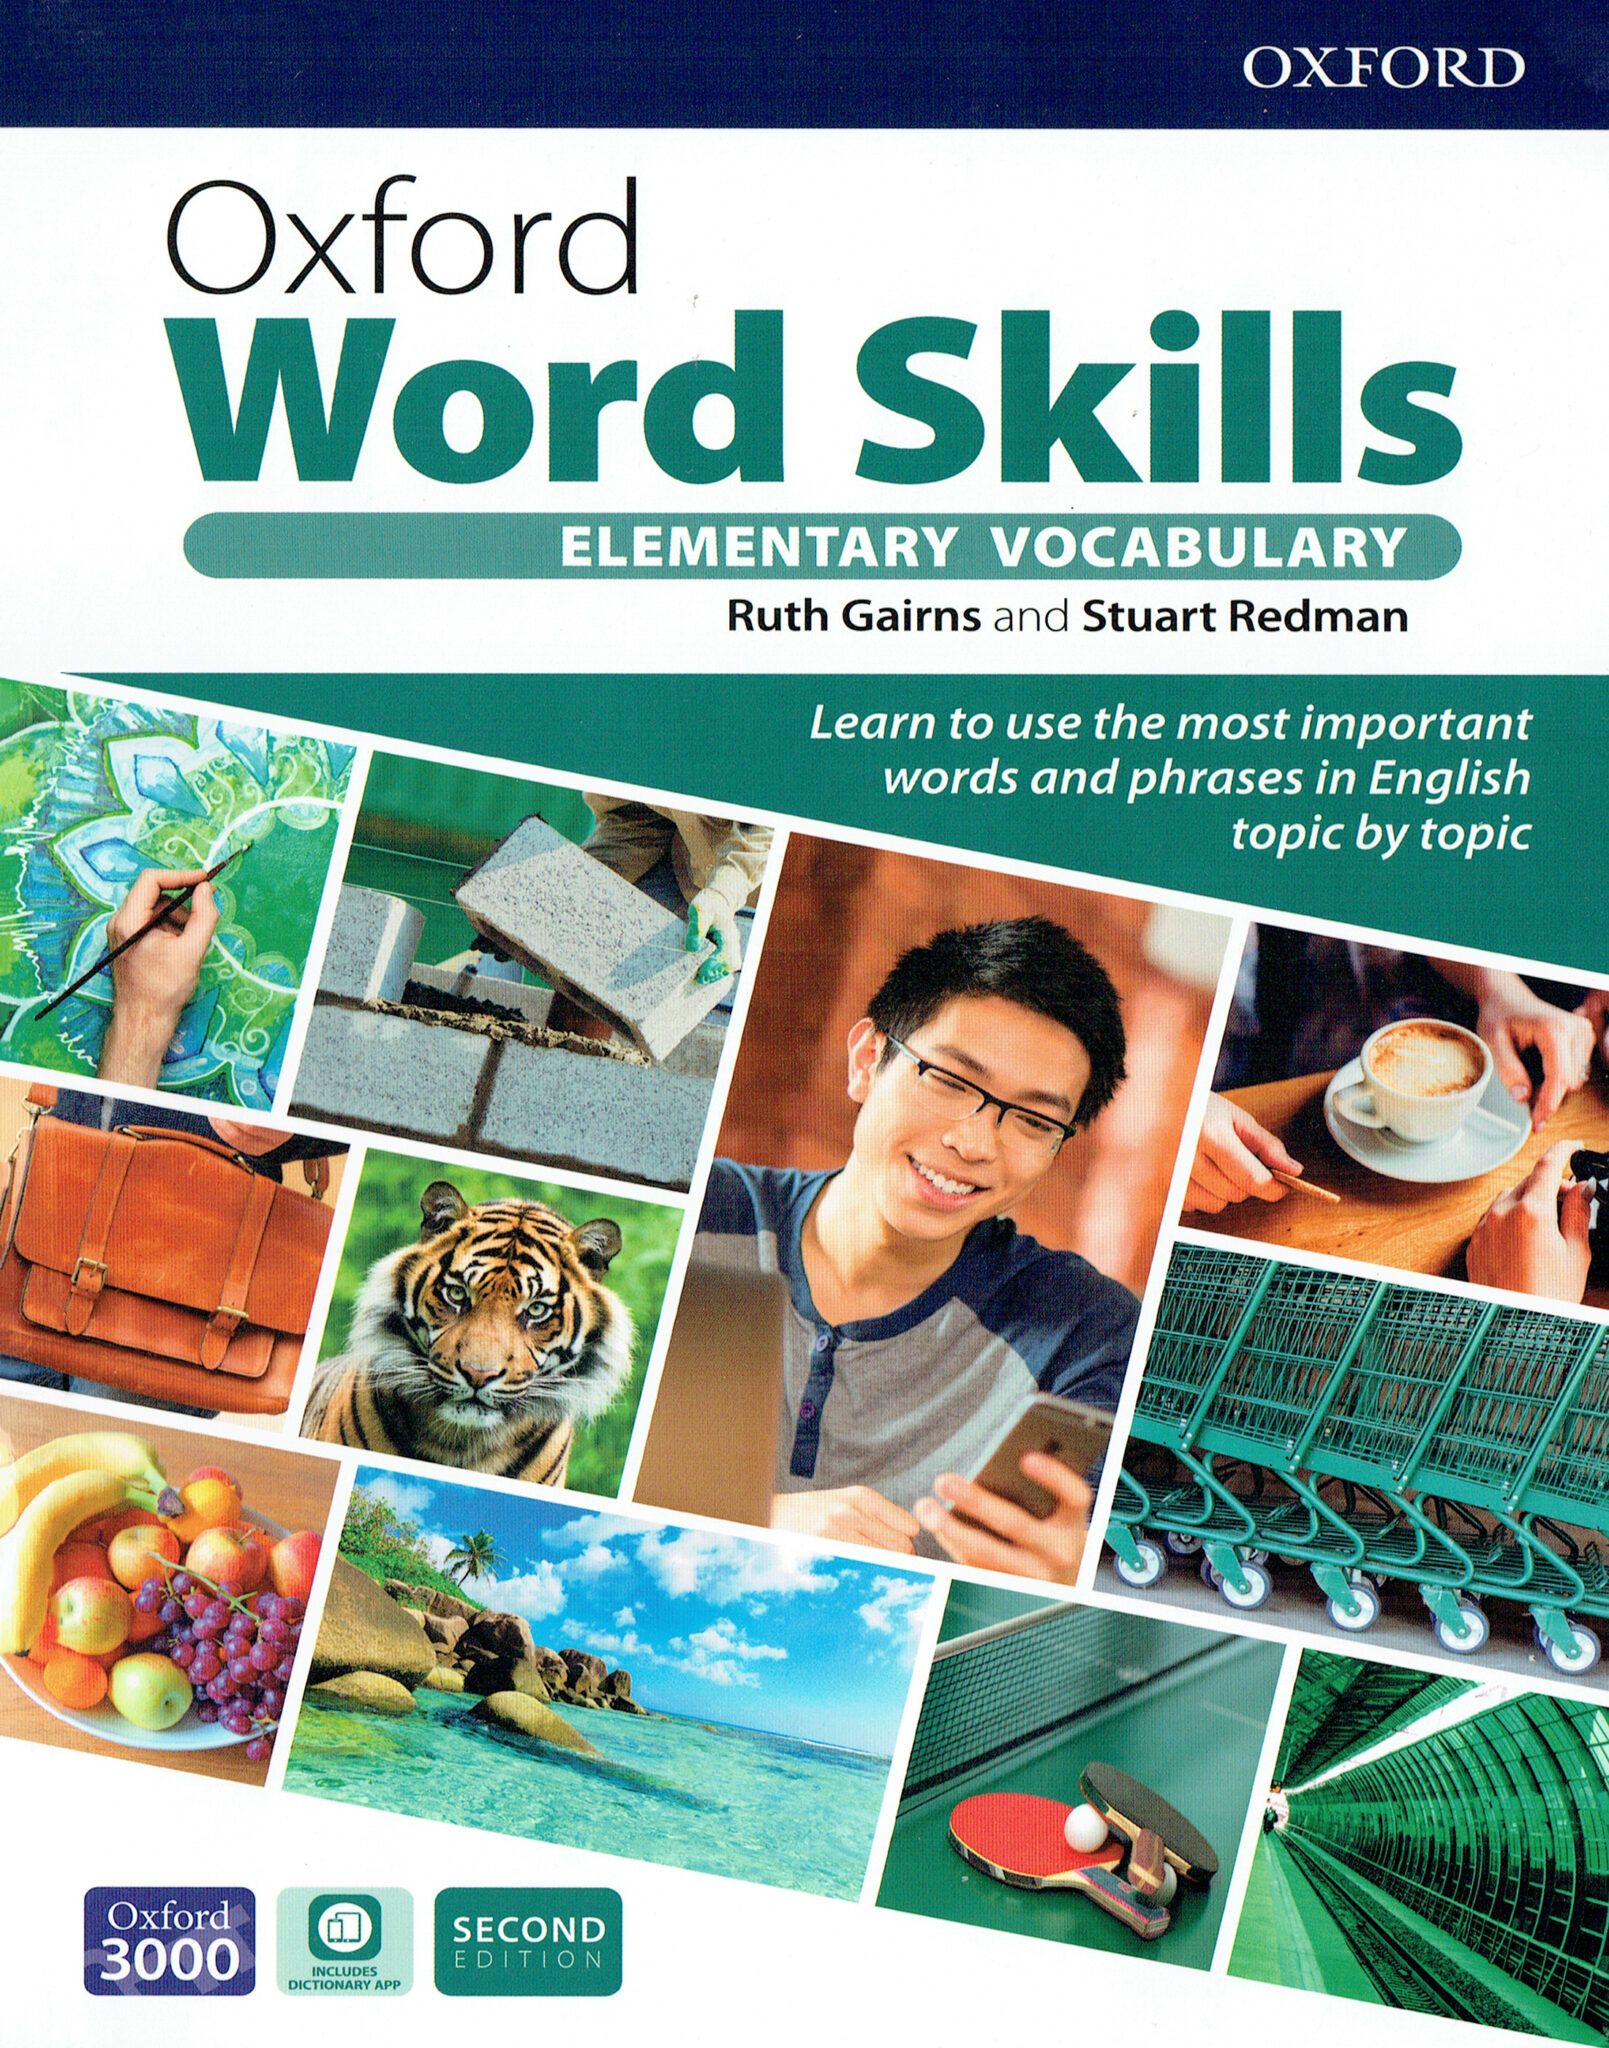 Elementary skills. Oxford Word skills (2nd Edition) Elementary Vocabulary. Oxford Word skills second Edition Elementary. Oxford Word skills Ruth Gairns. Oxford Word skills Intermediate Vocabulary.